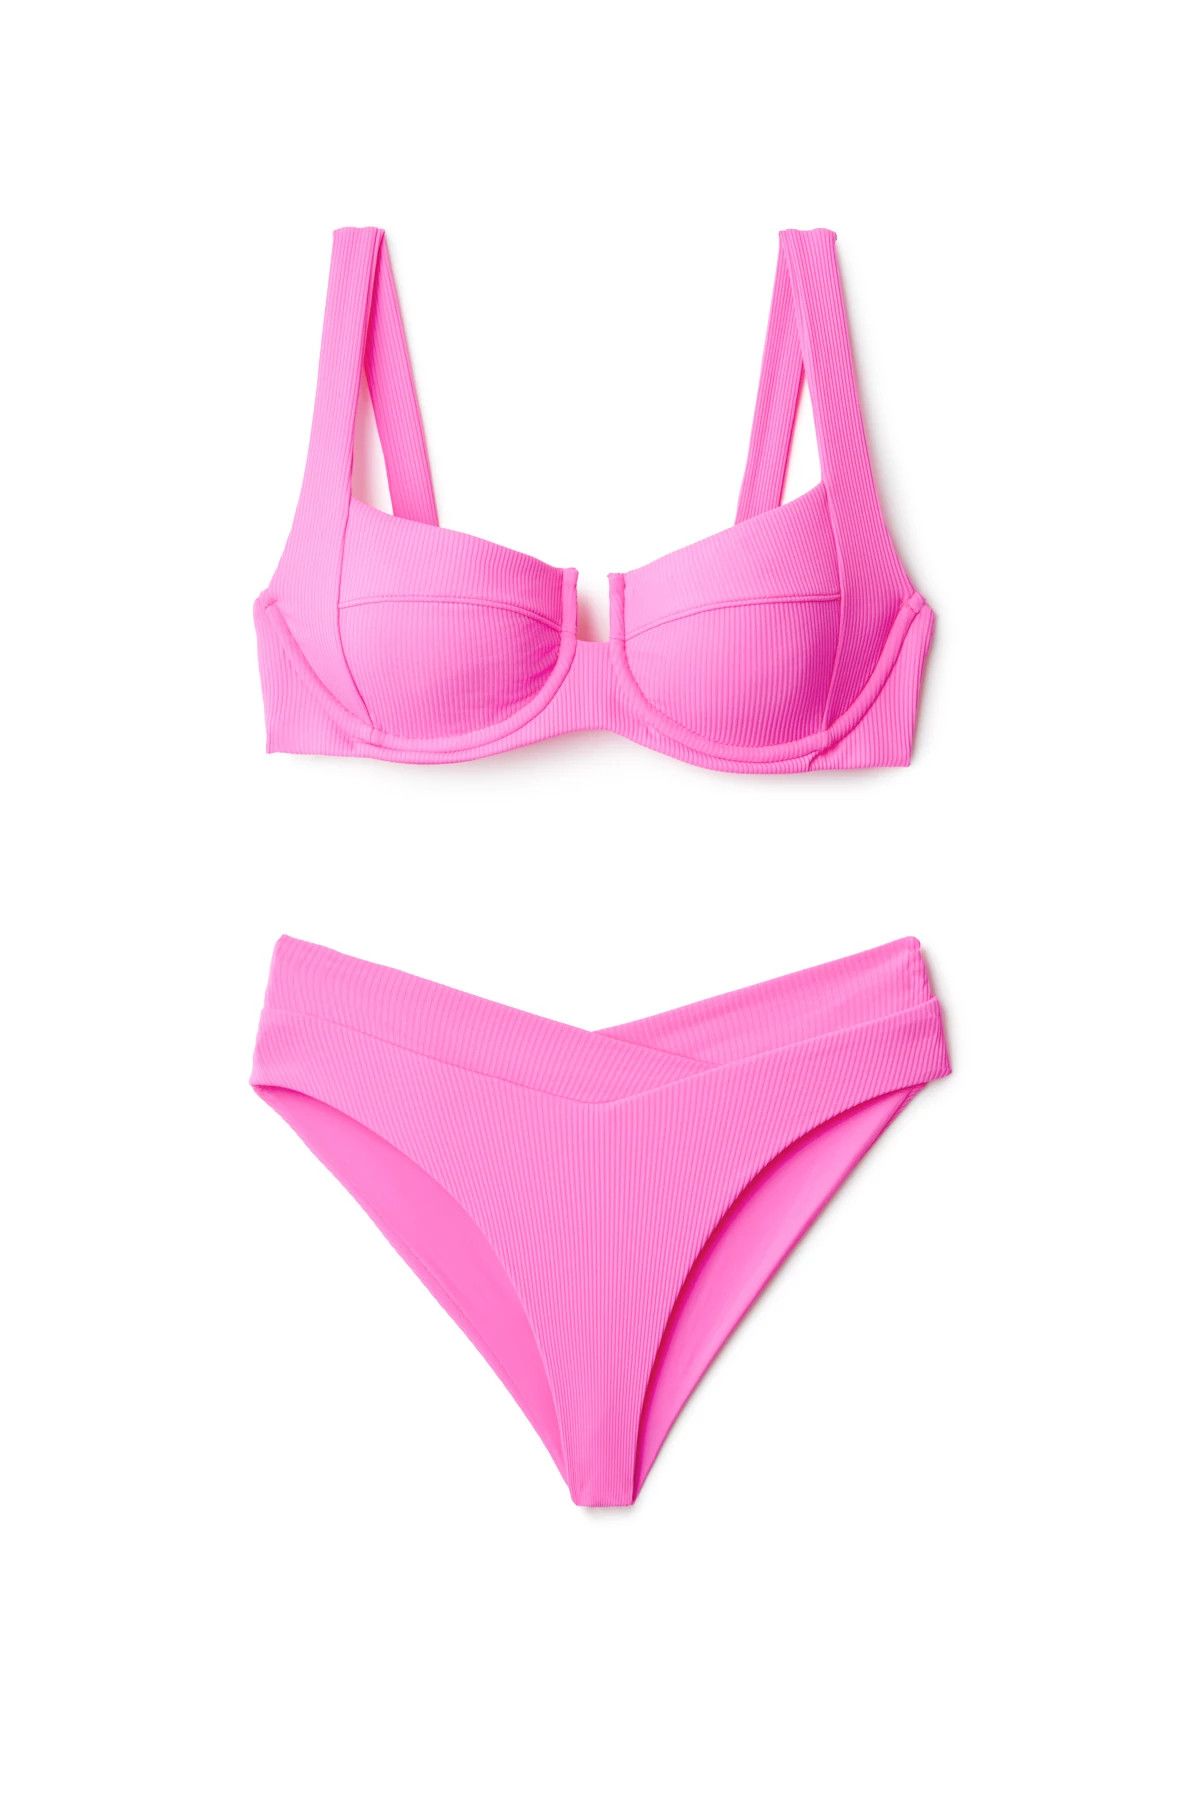 Montauk Underwire Adjustable Bikini Top | Everything But Water